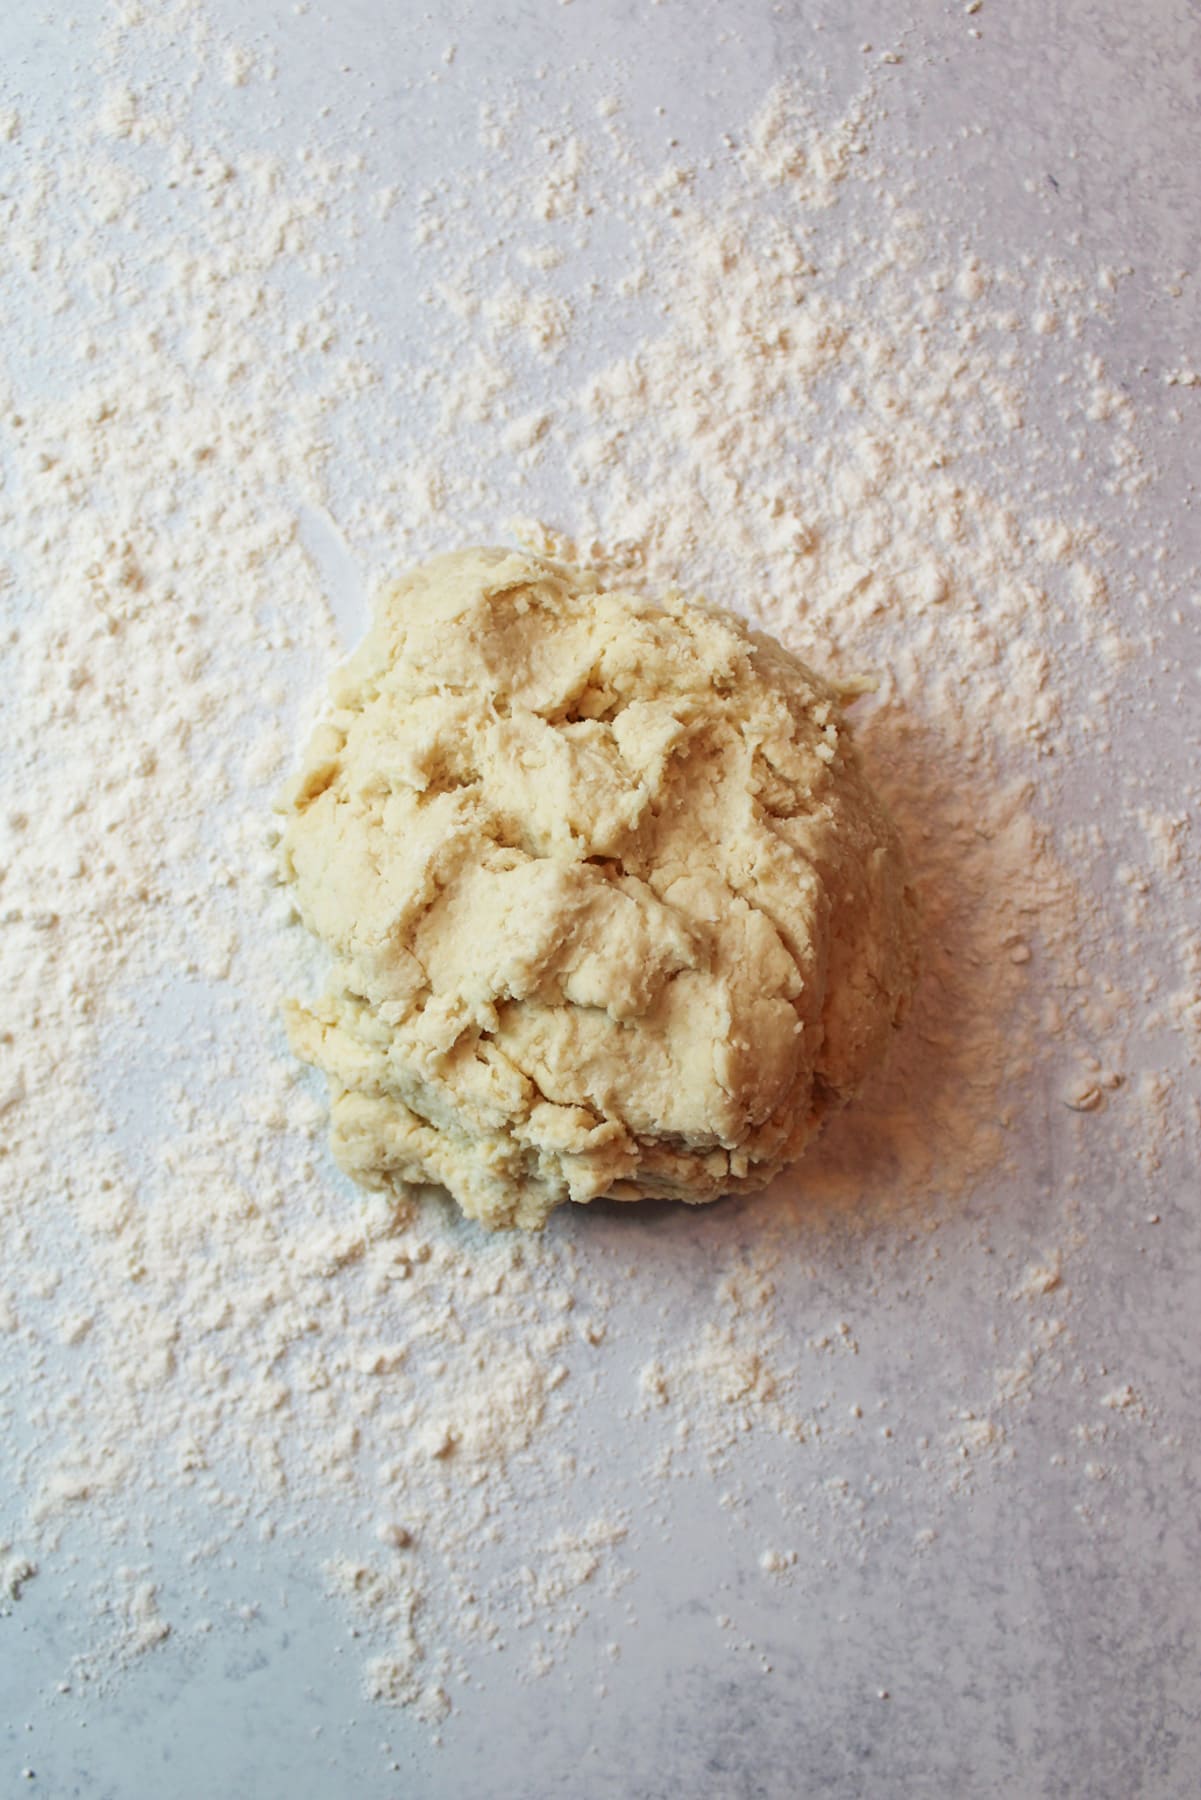 scone dough on a floured surface